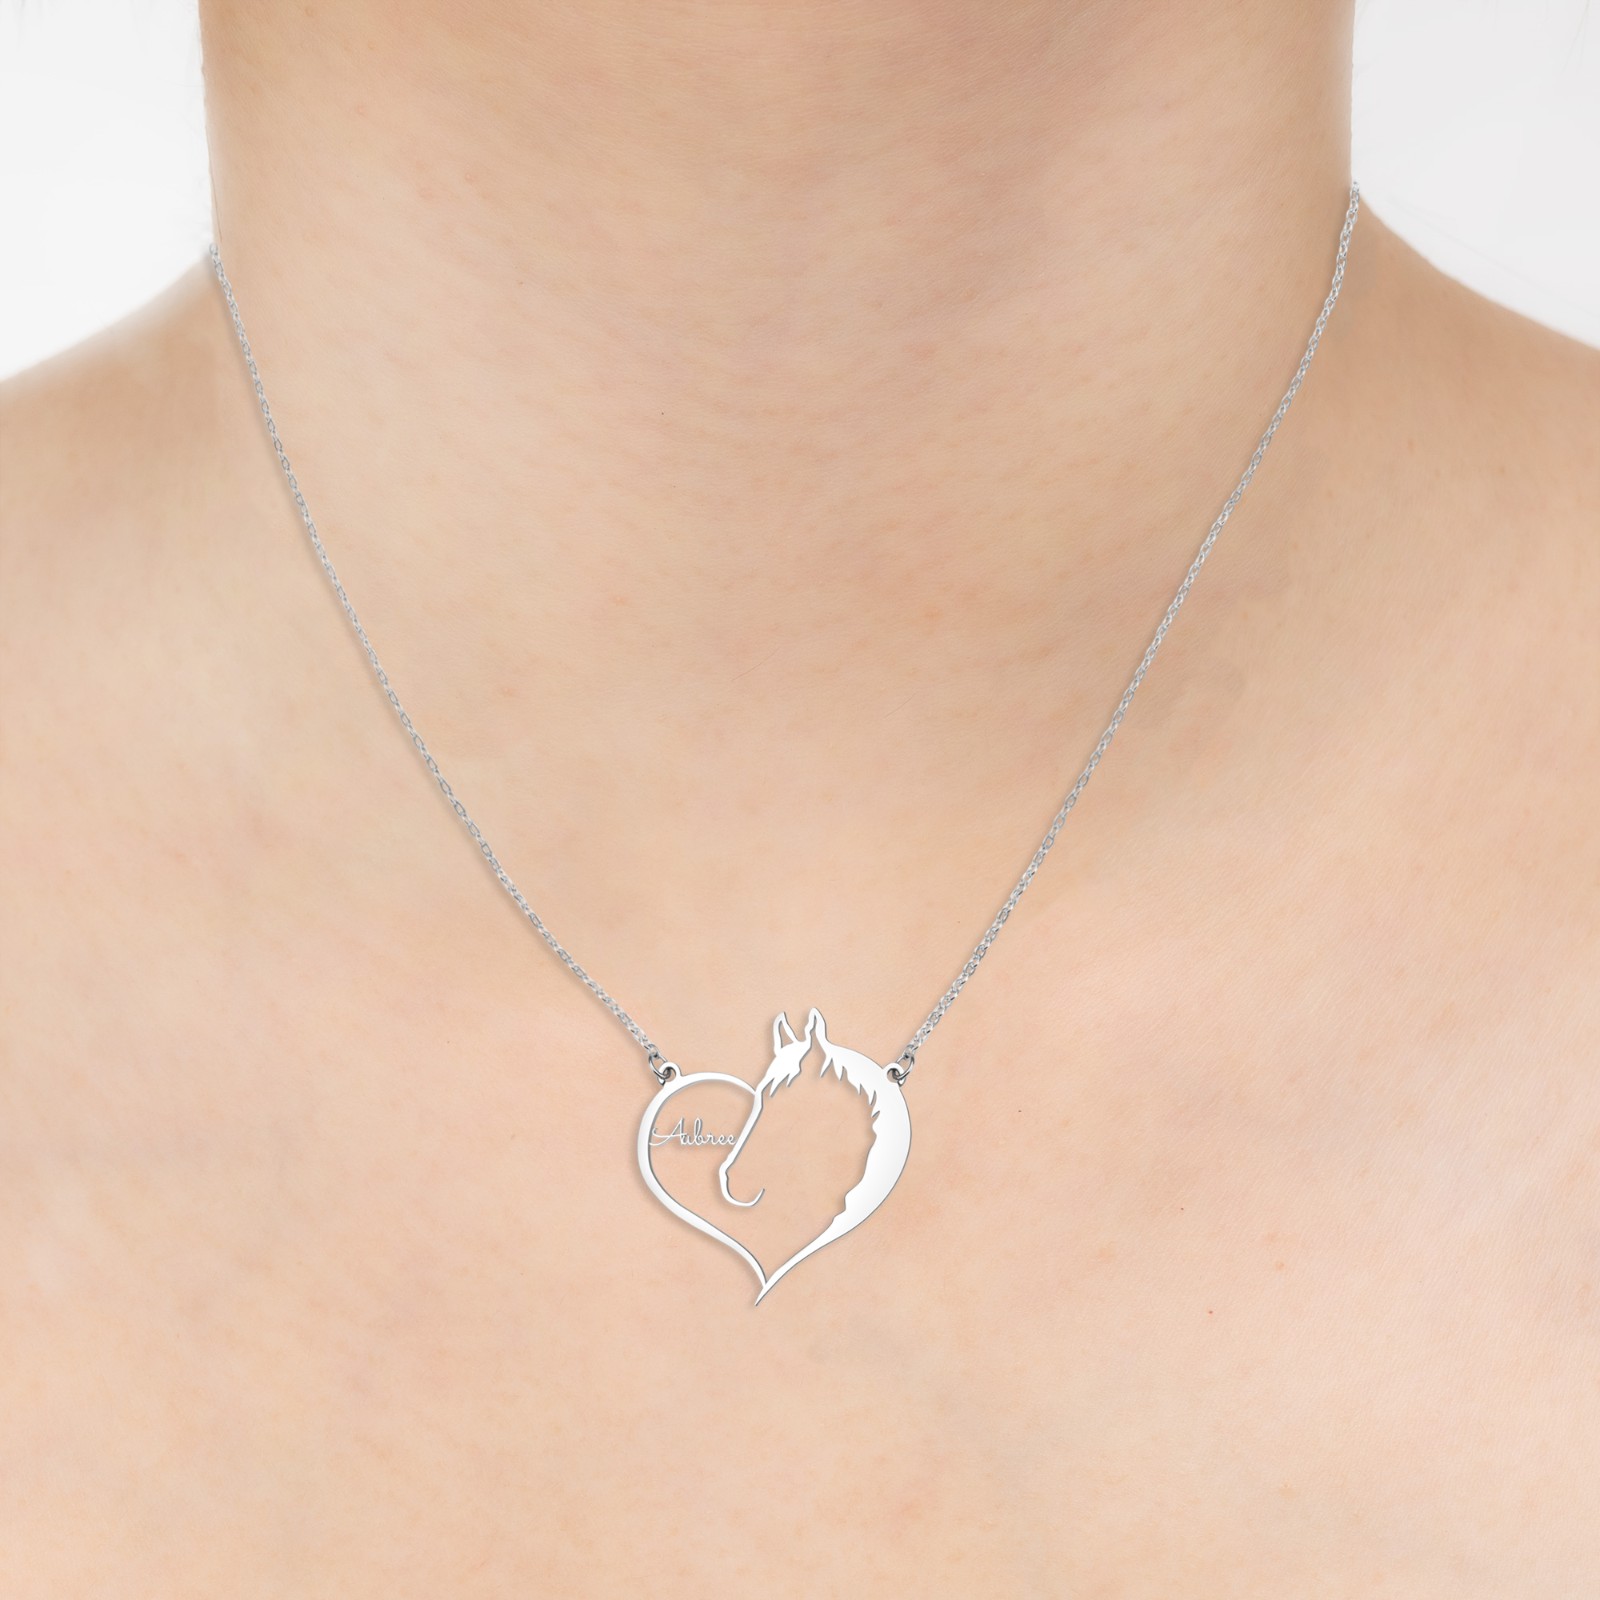 Custom Engraved Heart Horse/Heart Cat/Heart Dog/Horse Necklace, Heart Necklace, Teacher Gift, Minimalist, Bridesmaid Gift, Girlfriend Gift, Gift for Her, Gift for Girl